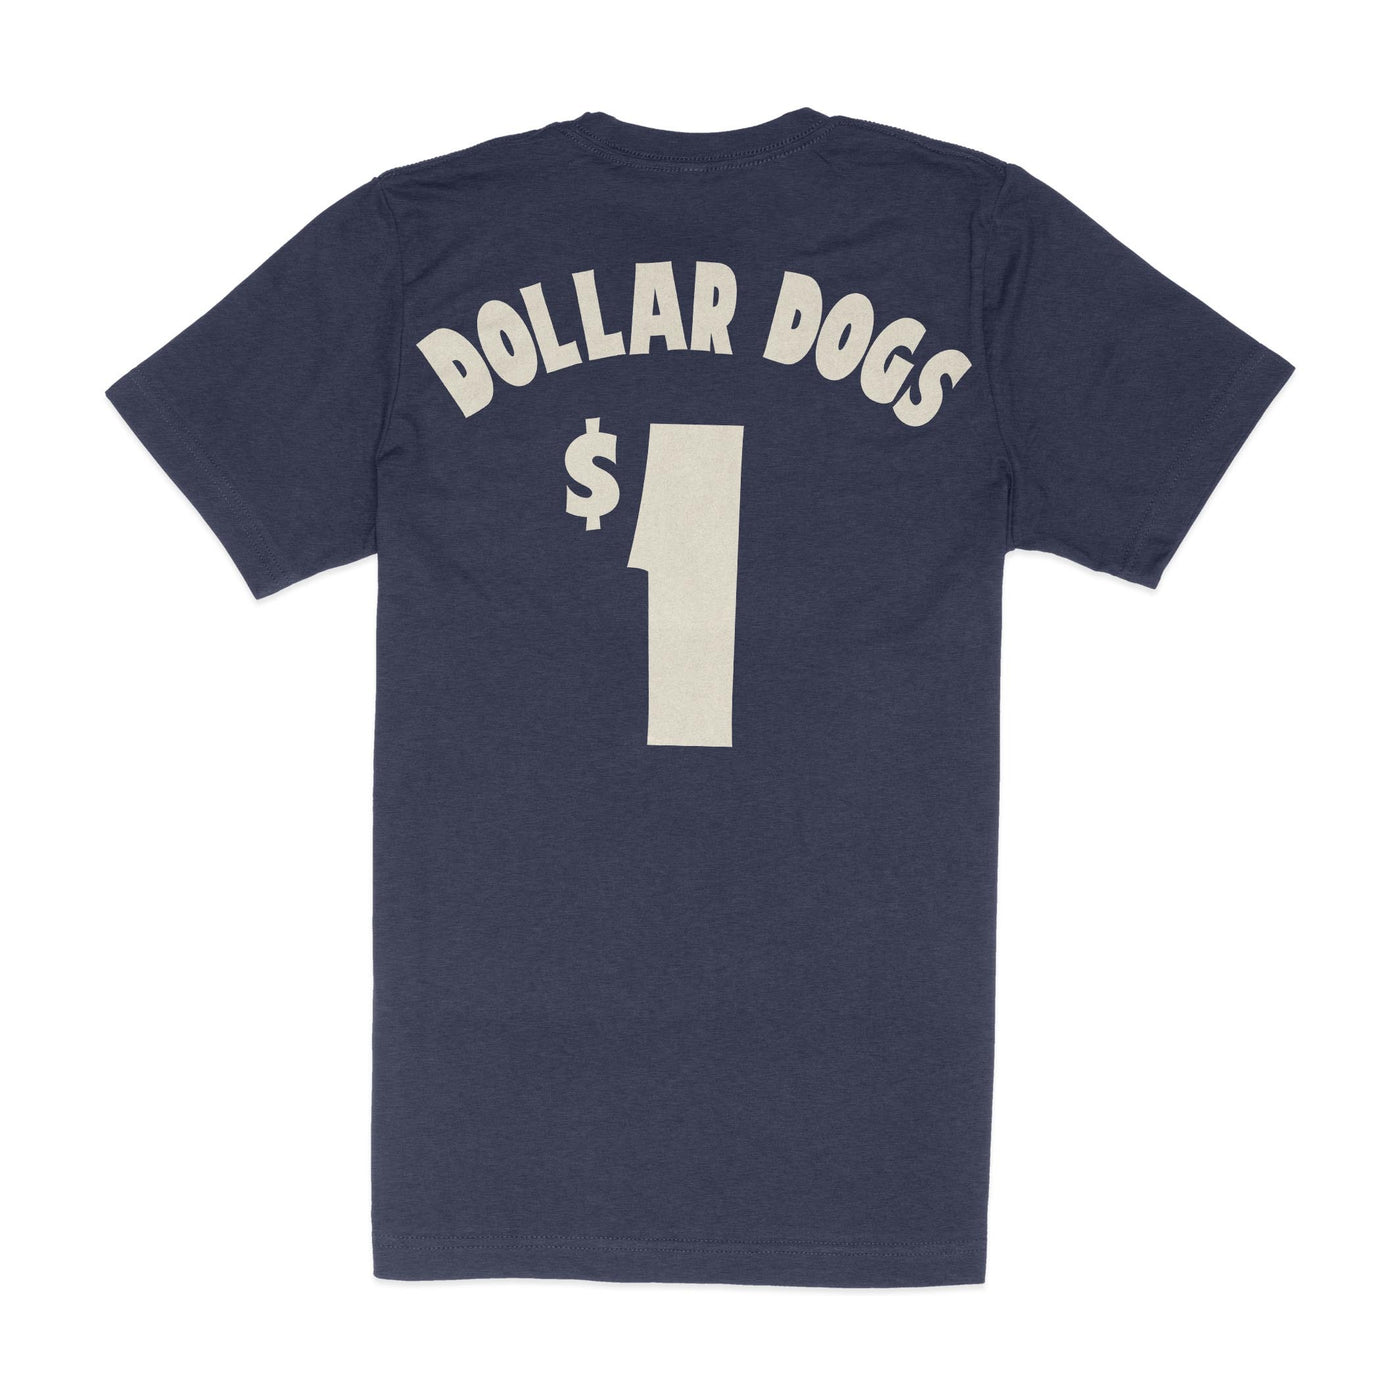 Dollar Dogs - Unisex Crew T-Shirt